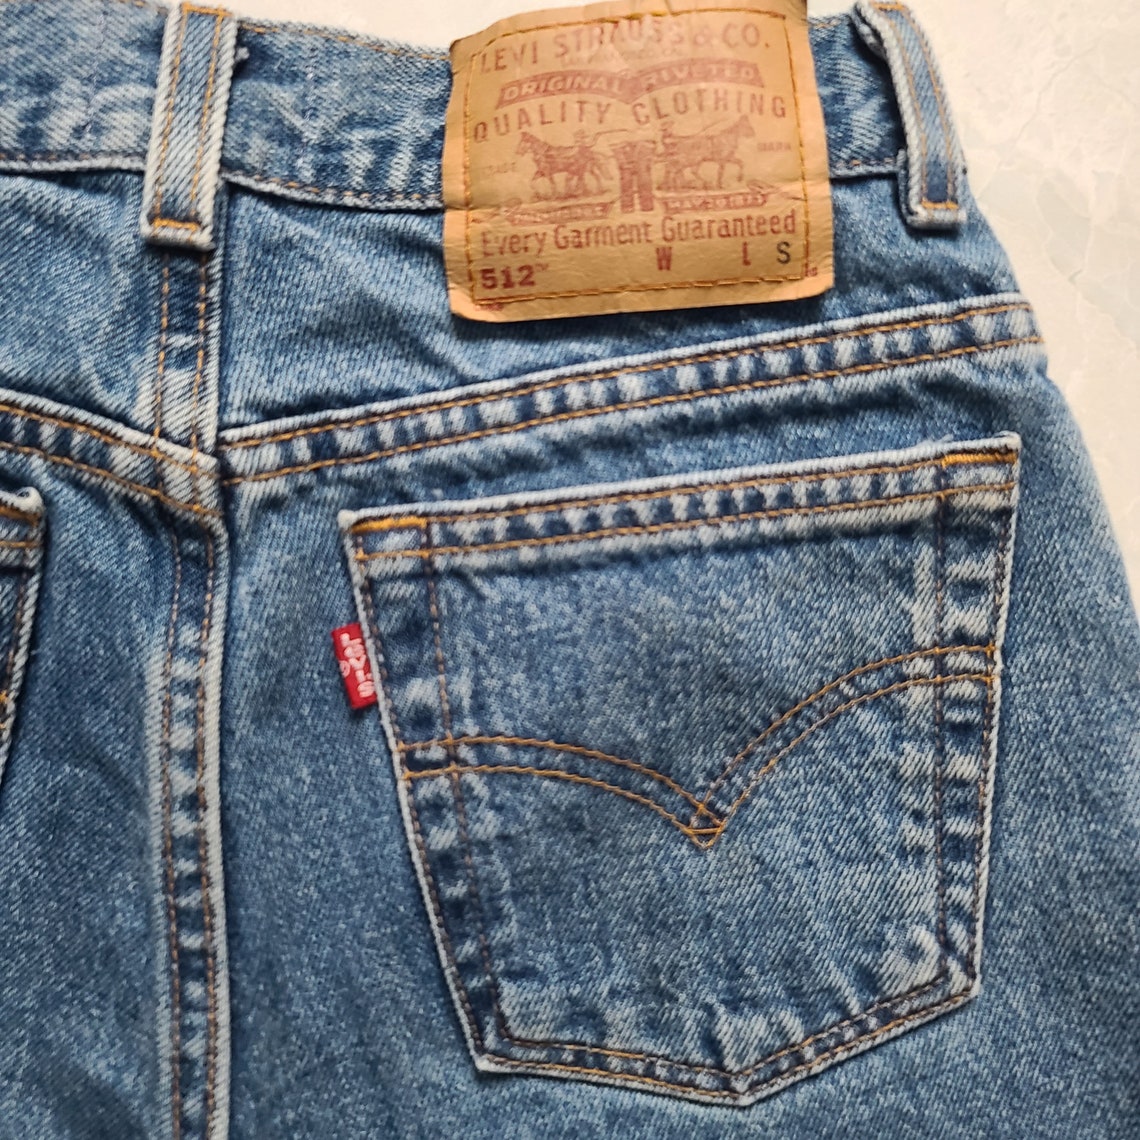 Size 25 26 Vintage Levi's 512 Jeans Tag size 4 REG in | Etsy